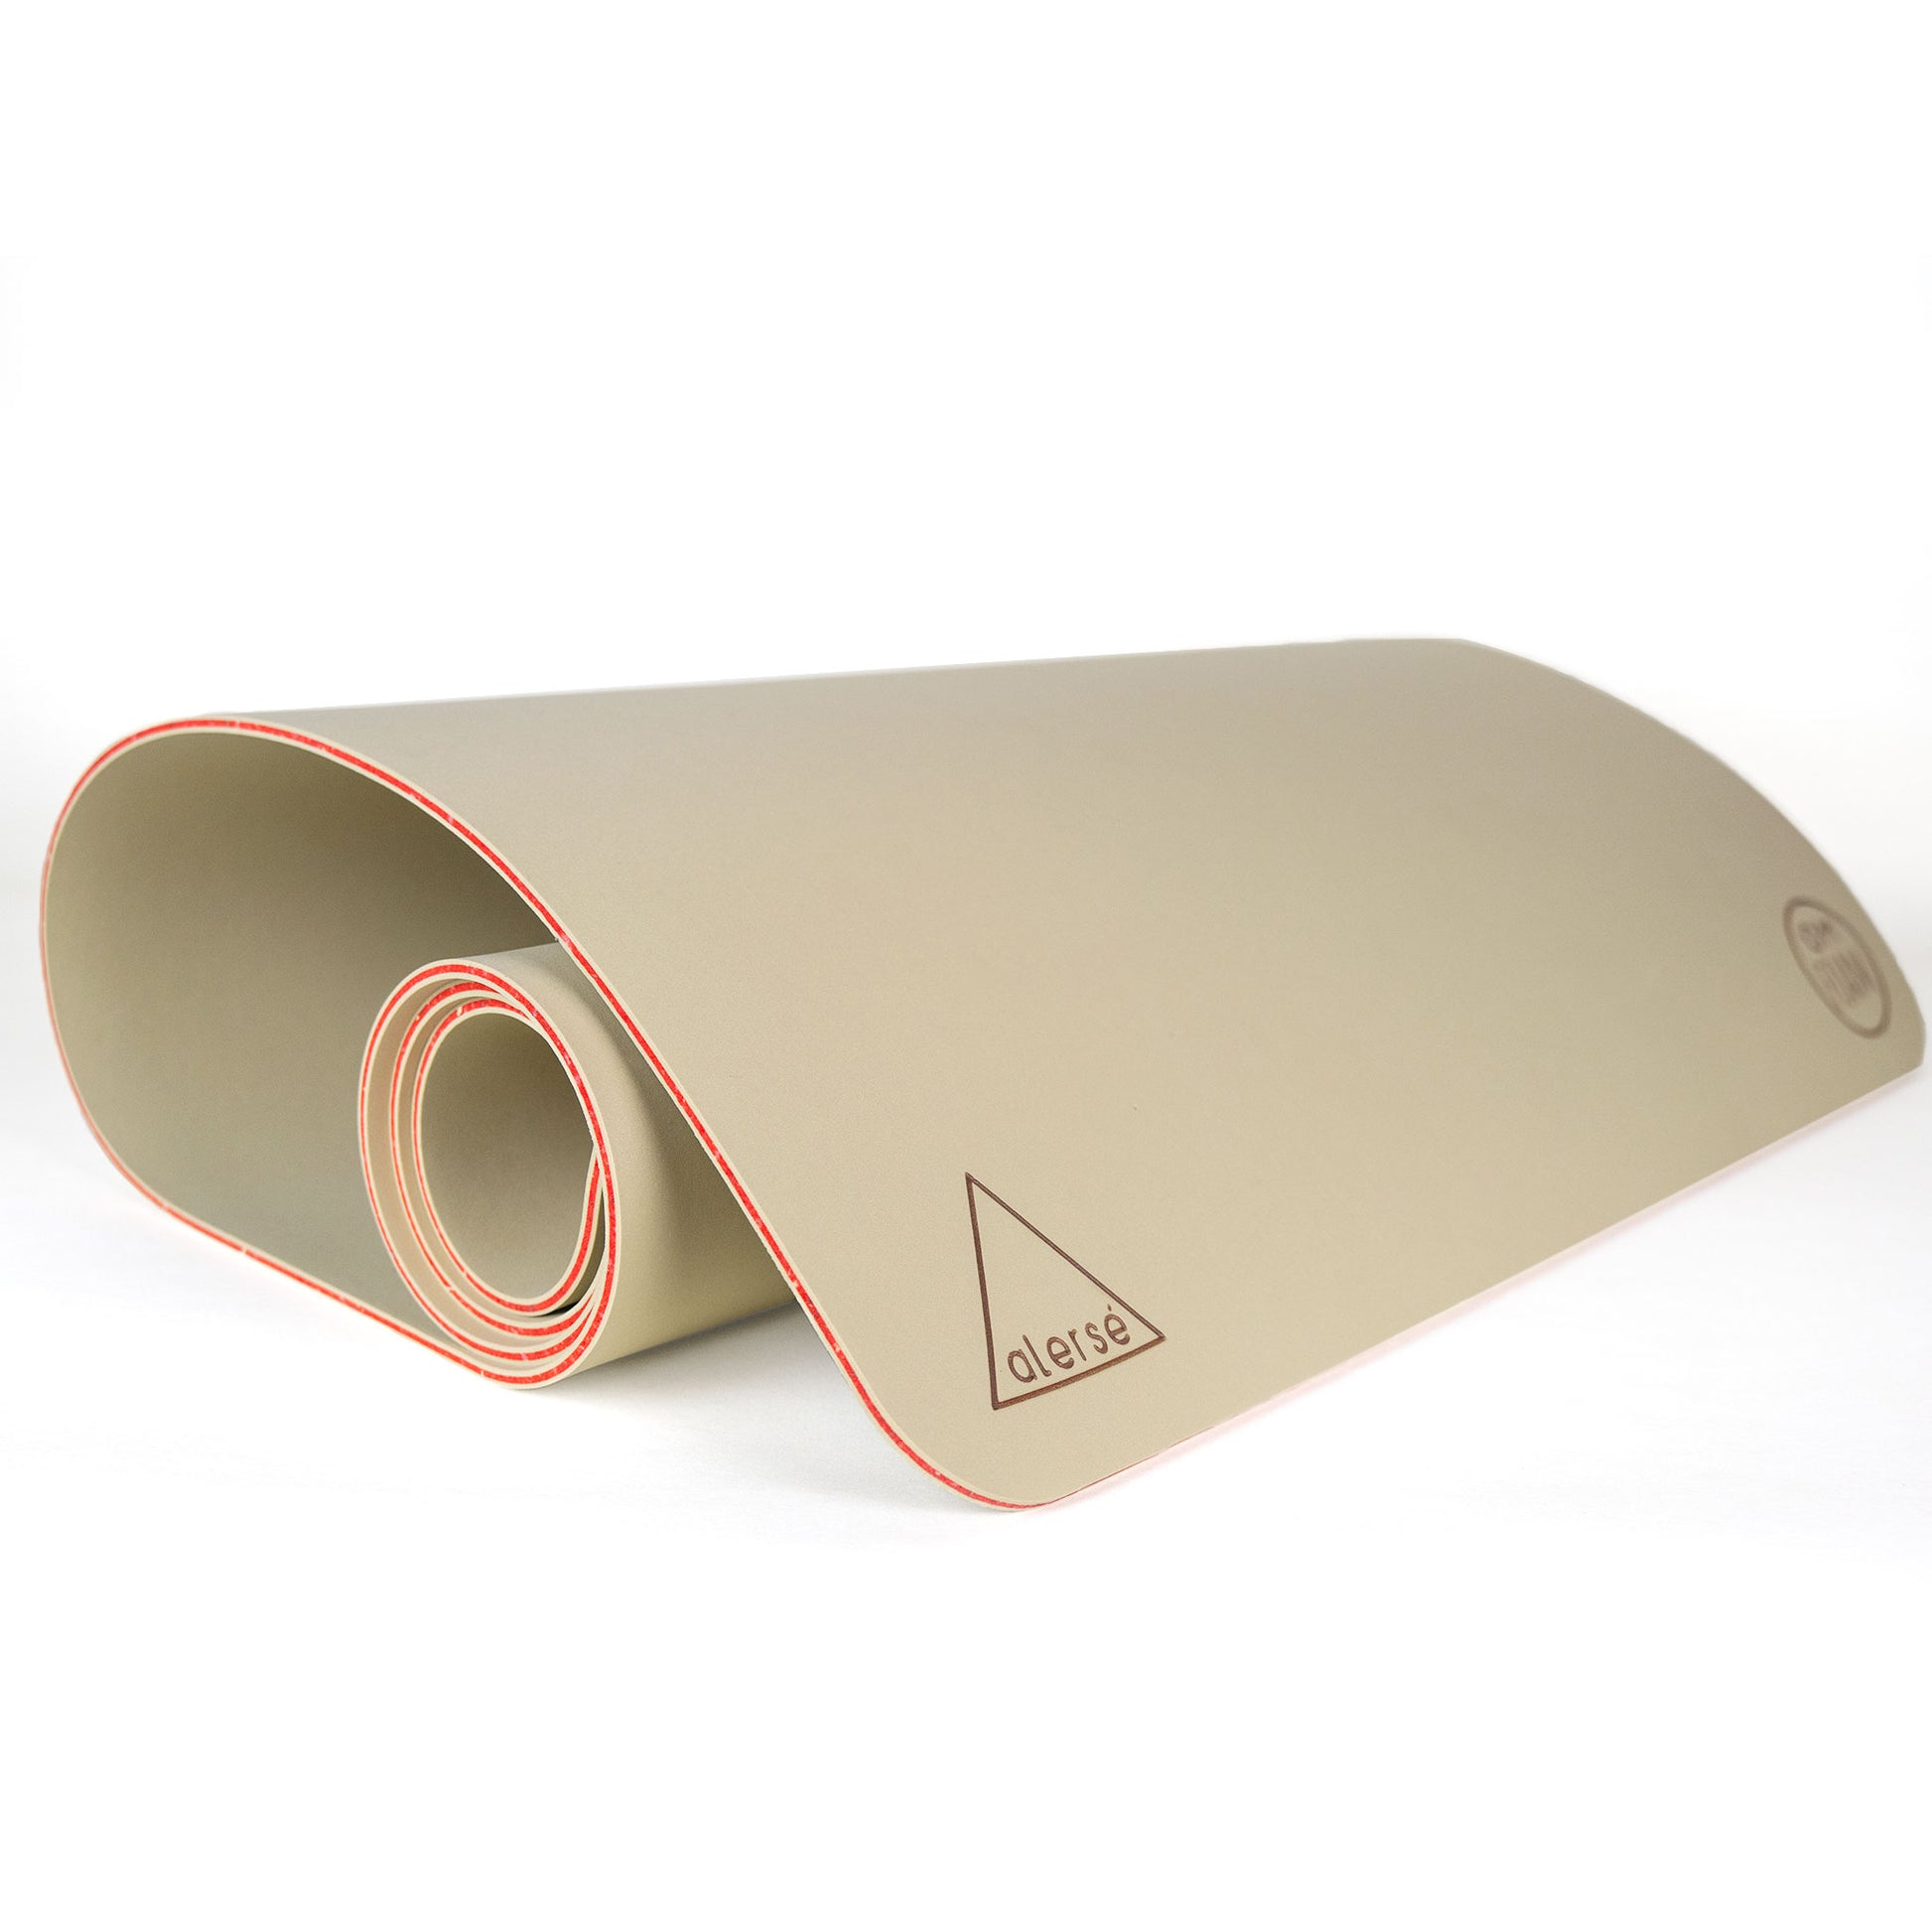 NEW!! alerse LIGHT Yoga Mat - Premium 6mm thick, 2.5lbs. - Sand